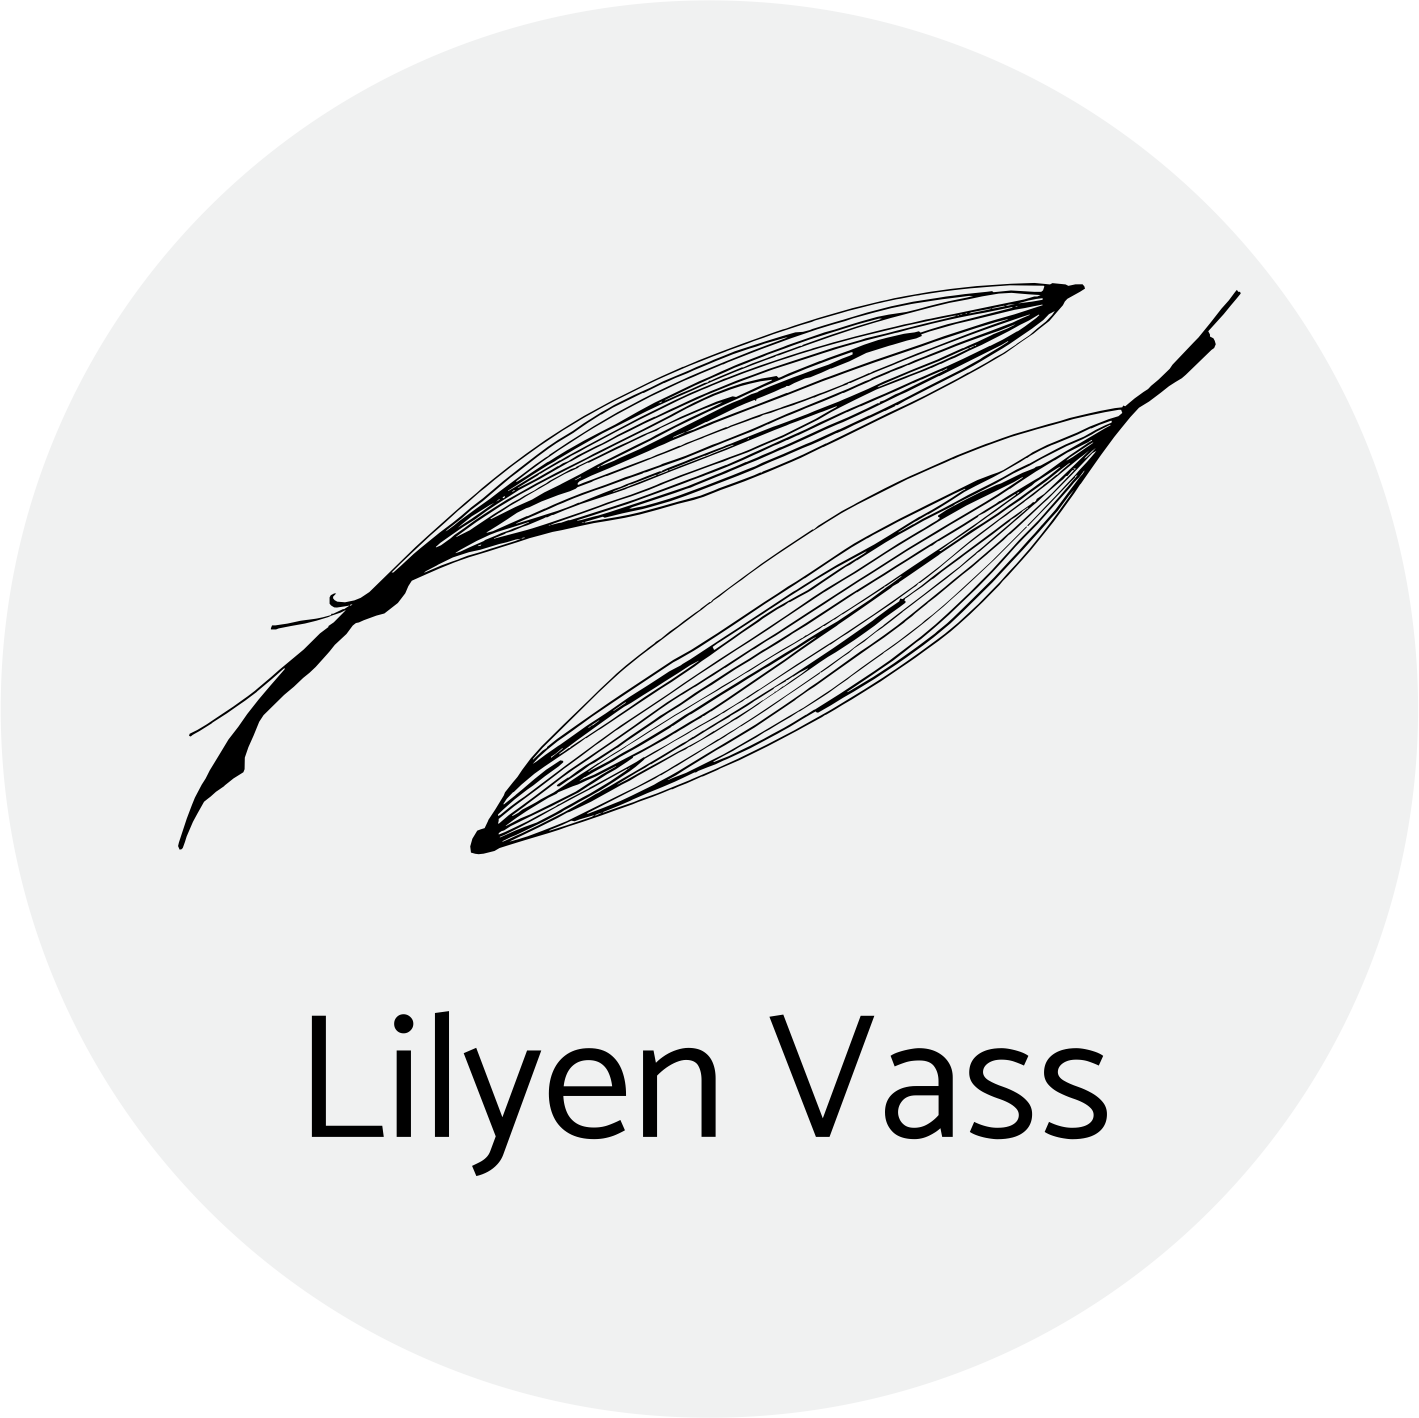 Lilyen Vass